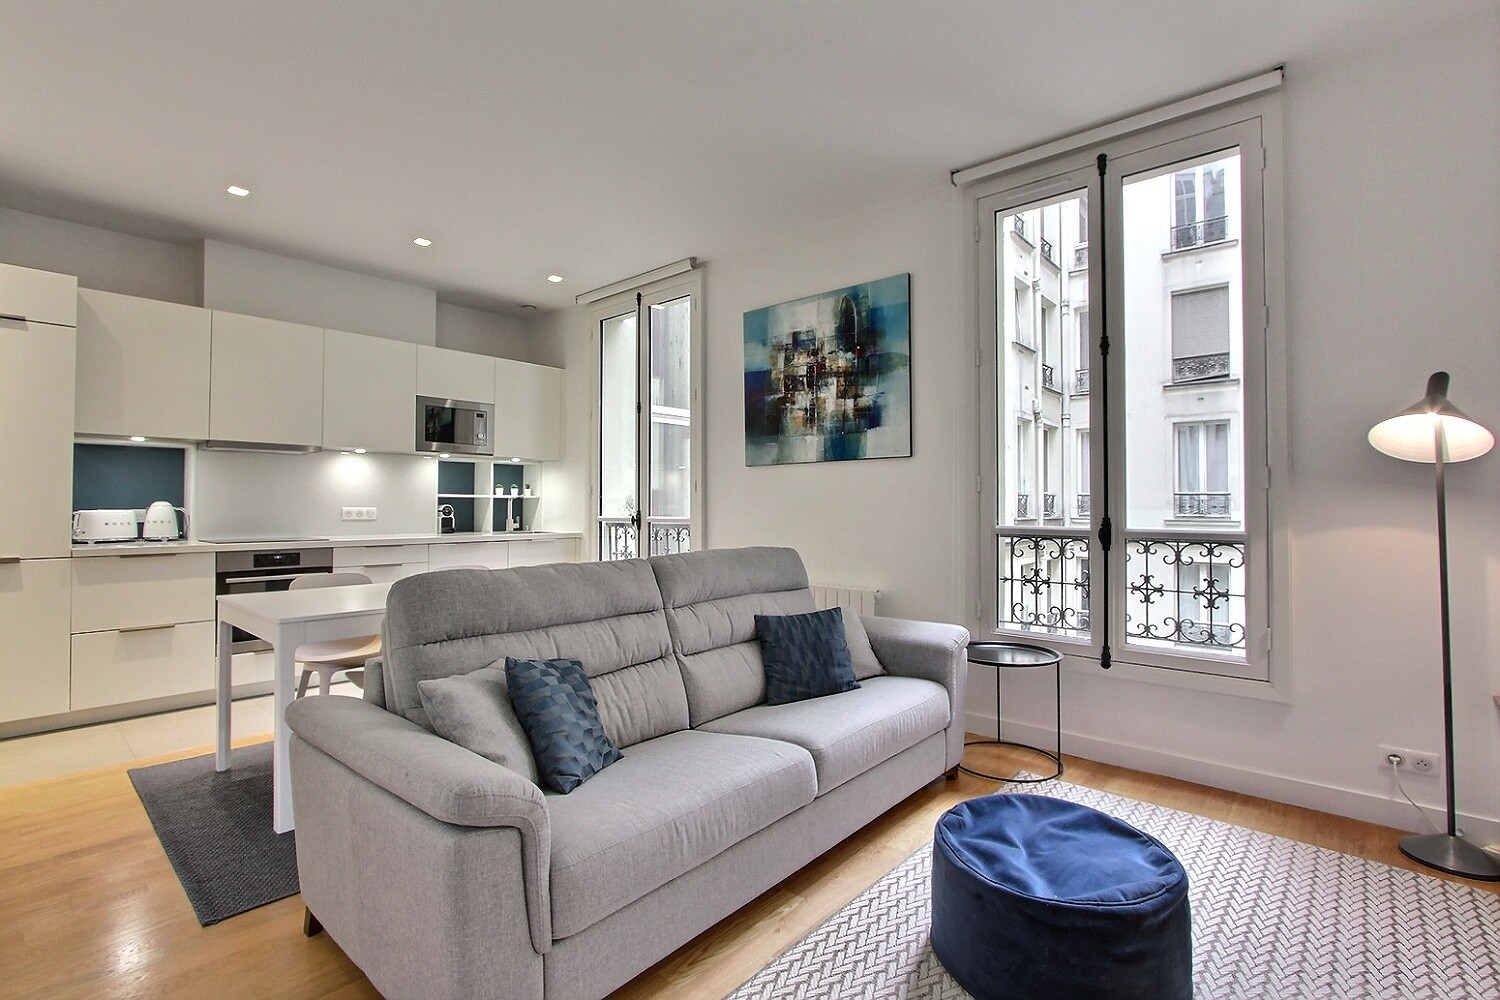 2 bedrooms apartment rental in Paris, Rue Littré